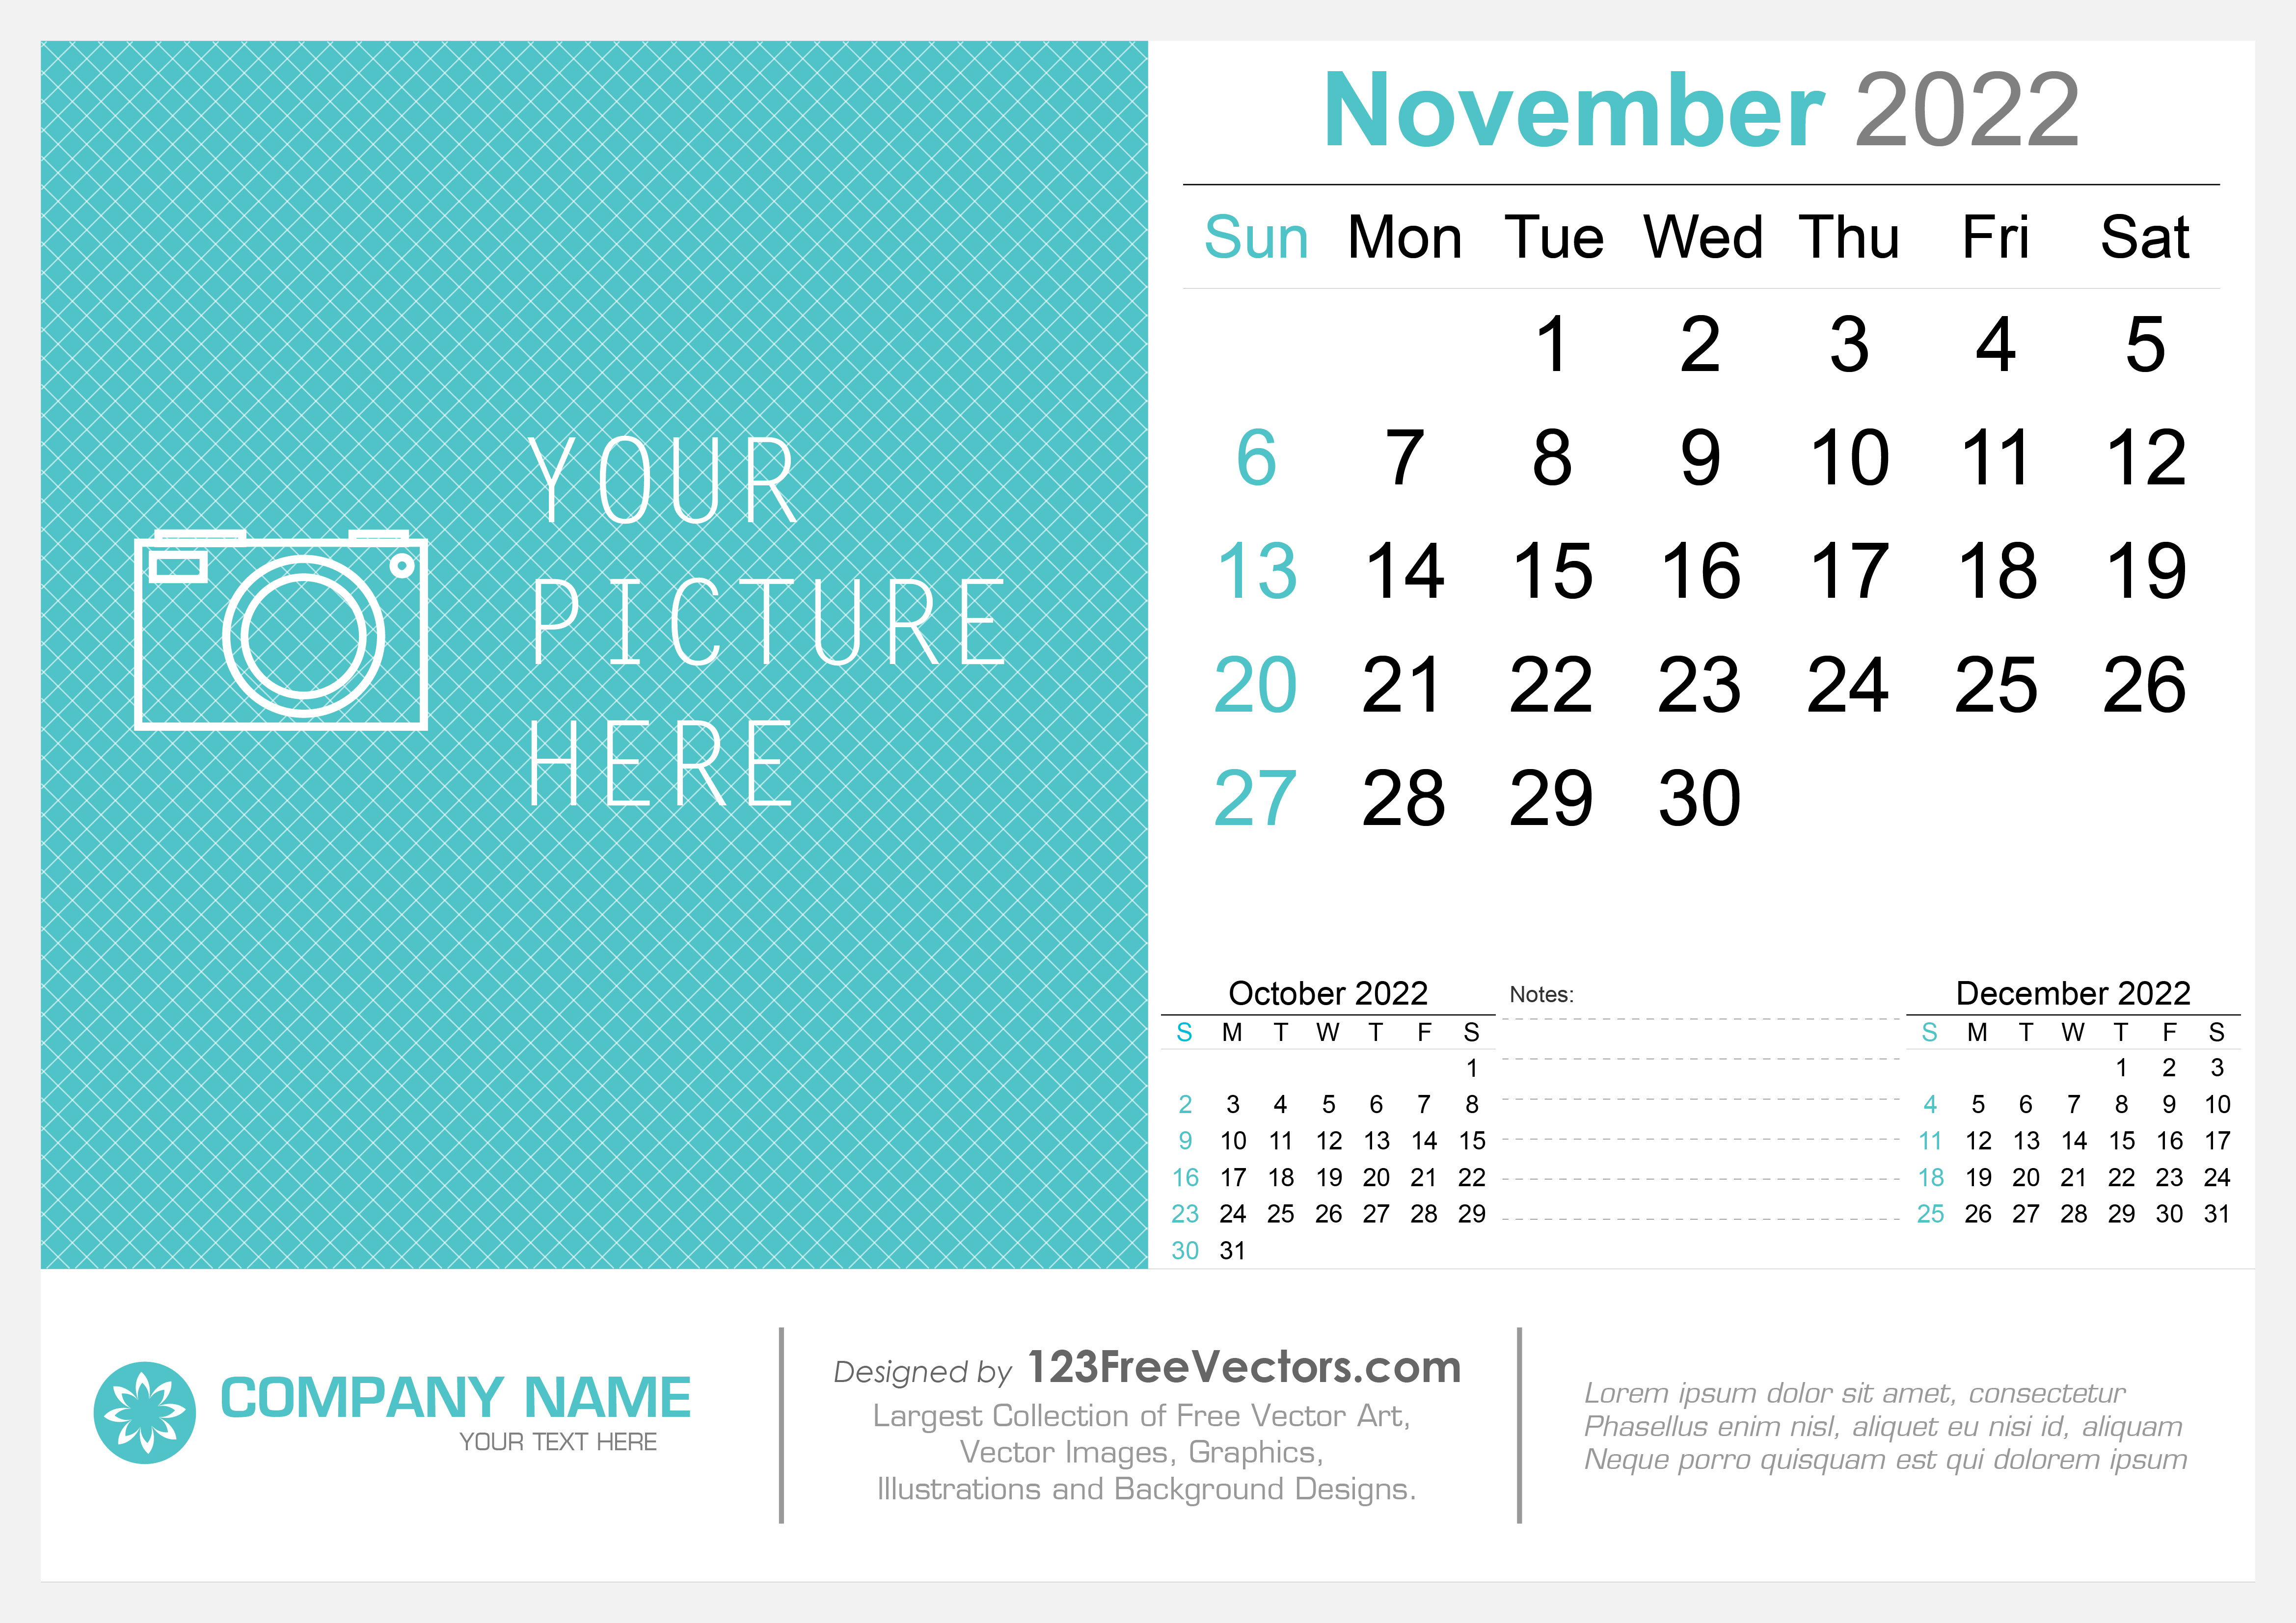 November 2022 Desktop Calendar Free November 2022 Desk Calendar